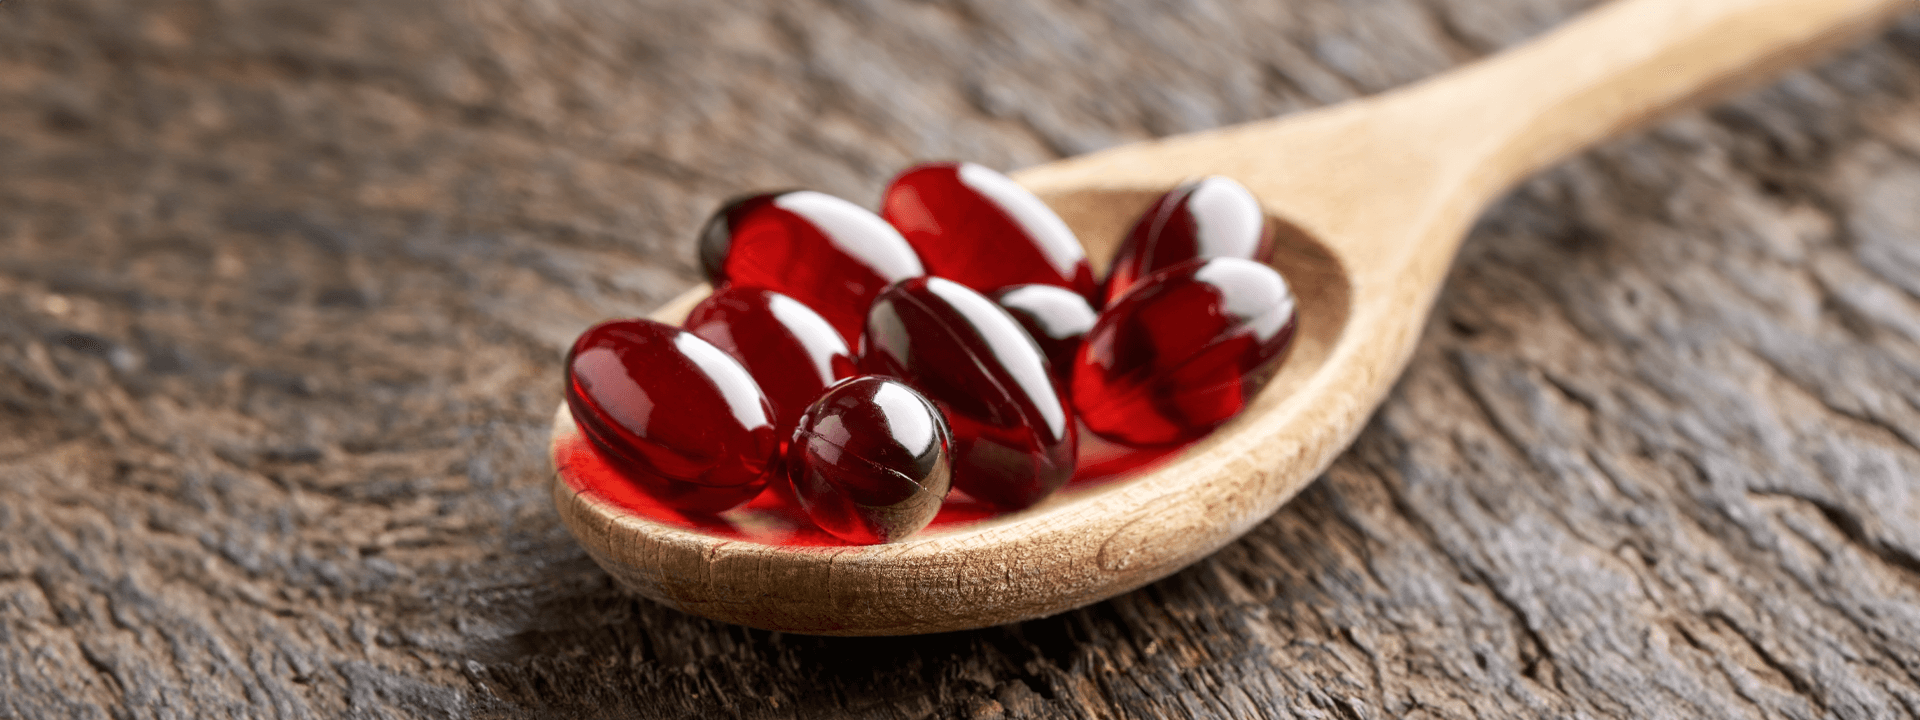 Omega-3 Fish Oils Enhanced the Efficacy of Statin Drugs